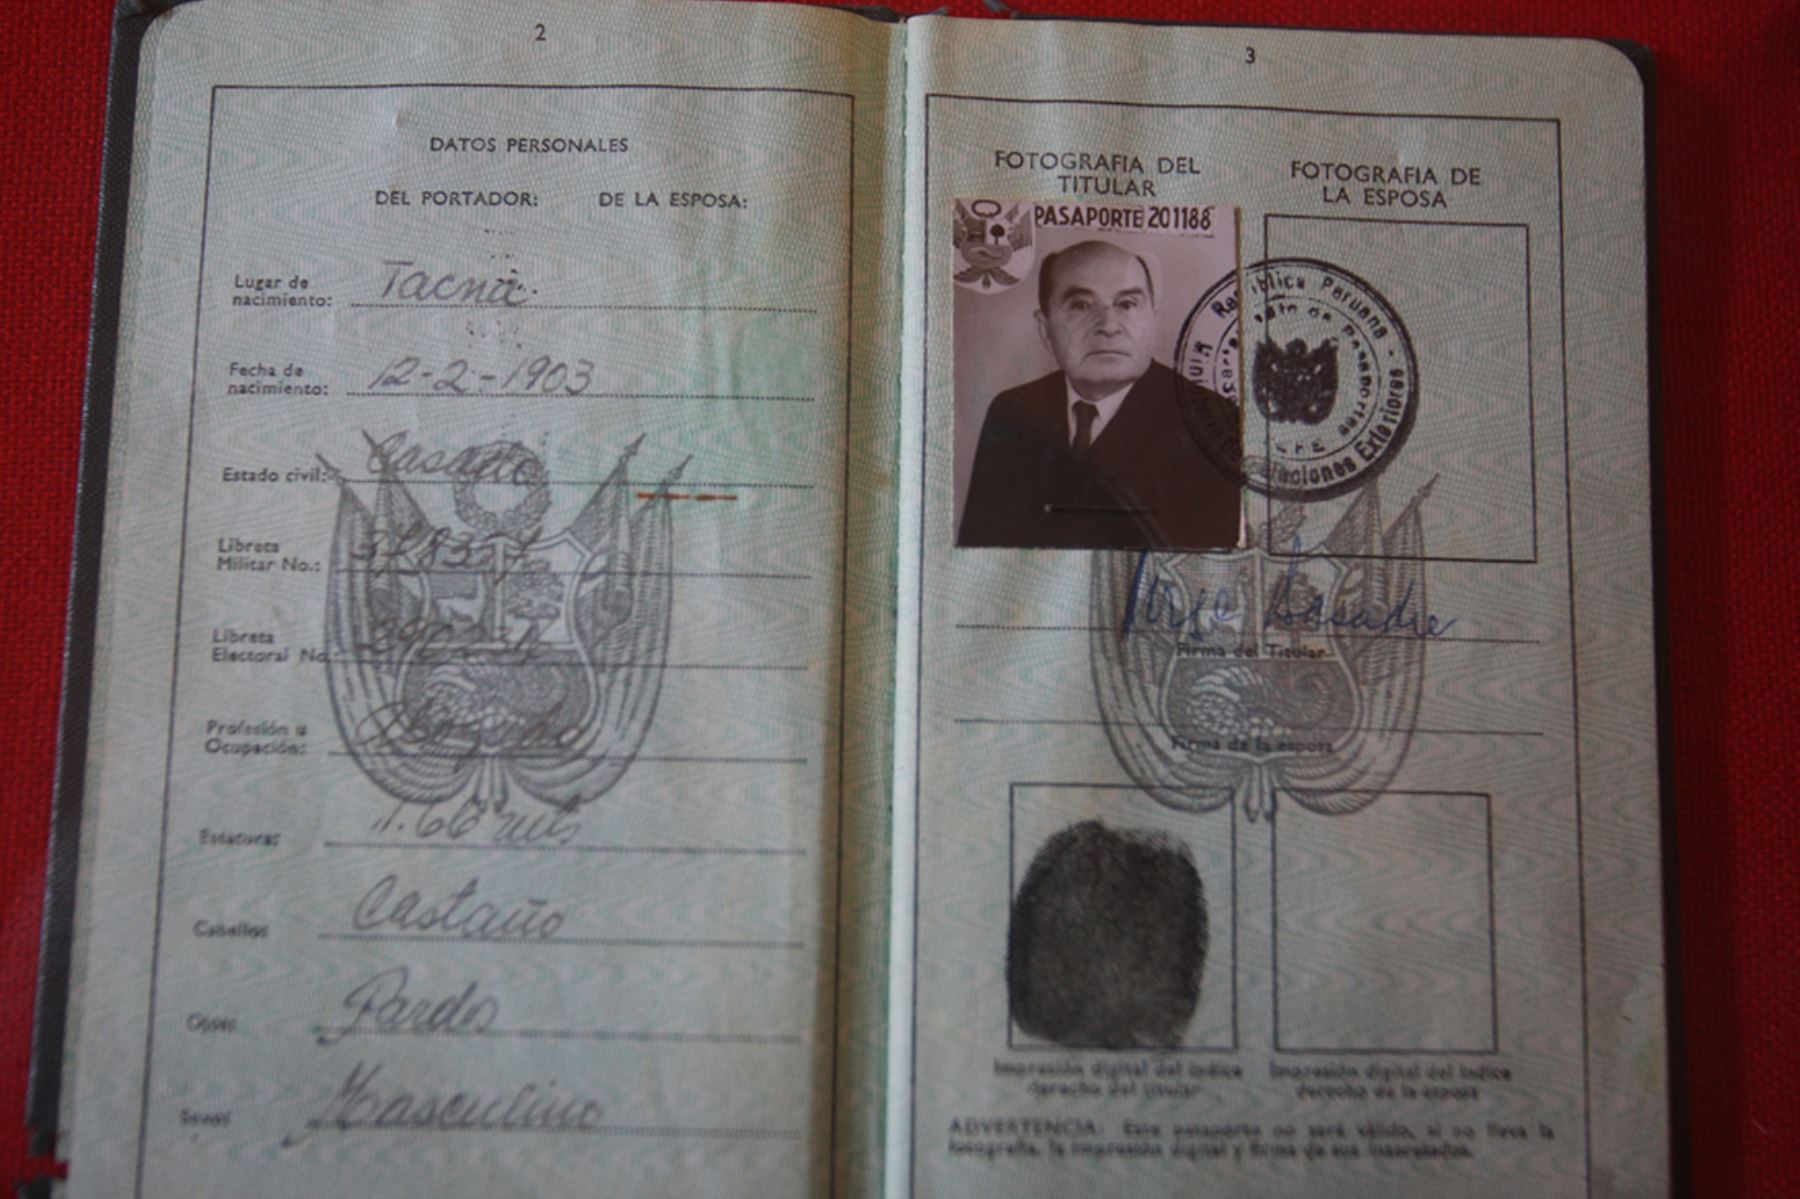 Pasaporte del historiado Jorge Basadre. Foto: Casa Museo Jorge Basadre.